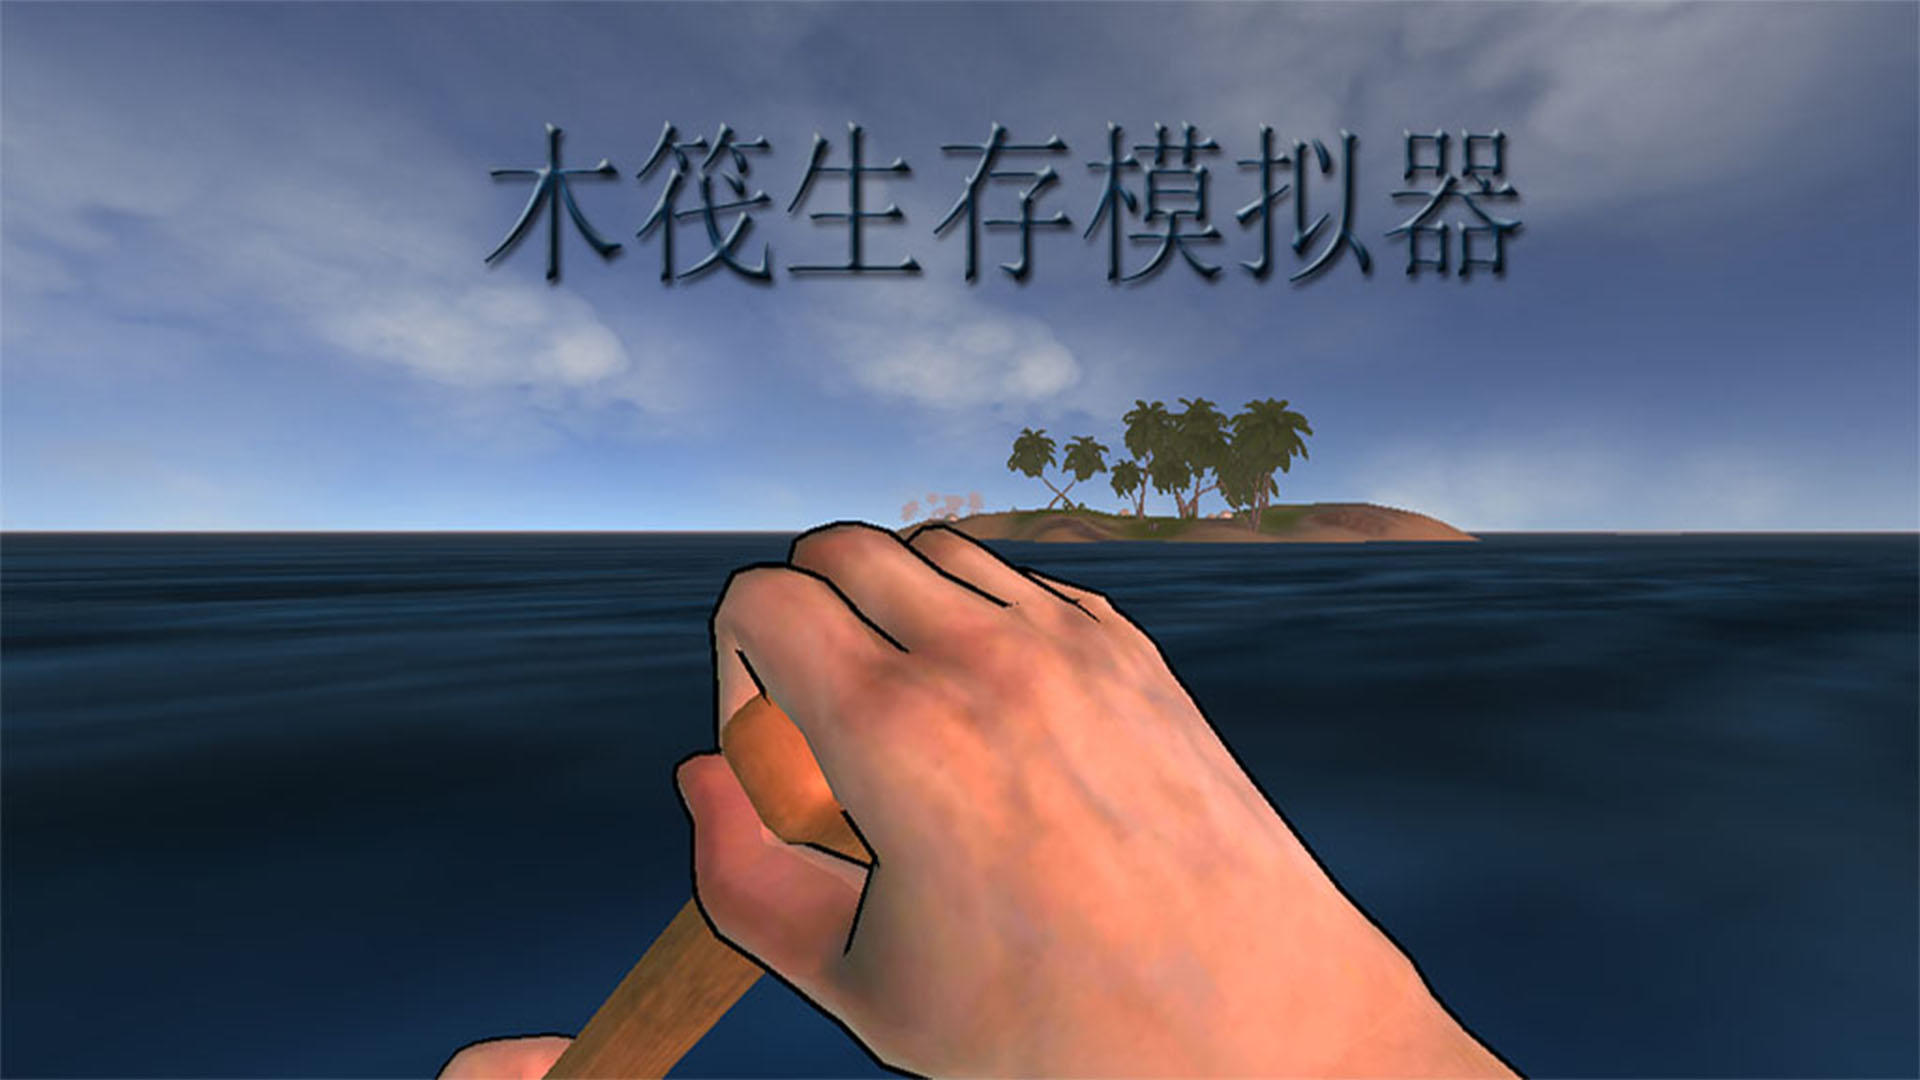 Banner of Simulador de supervivencia en balsa 